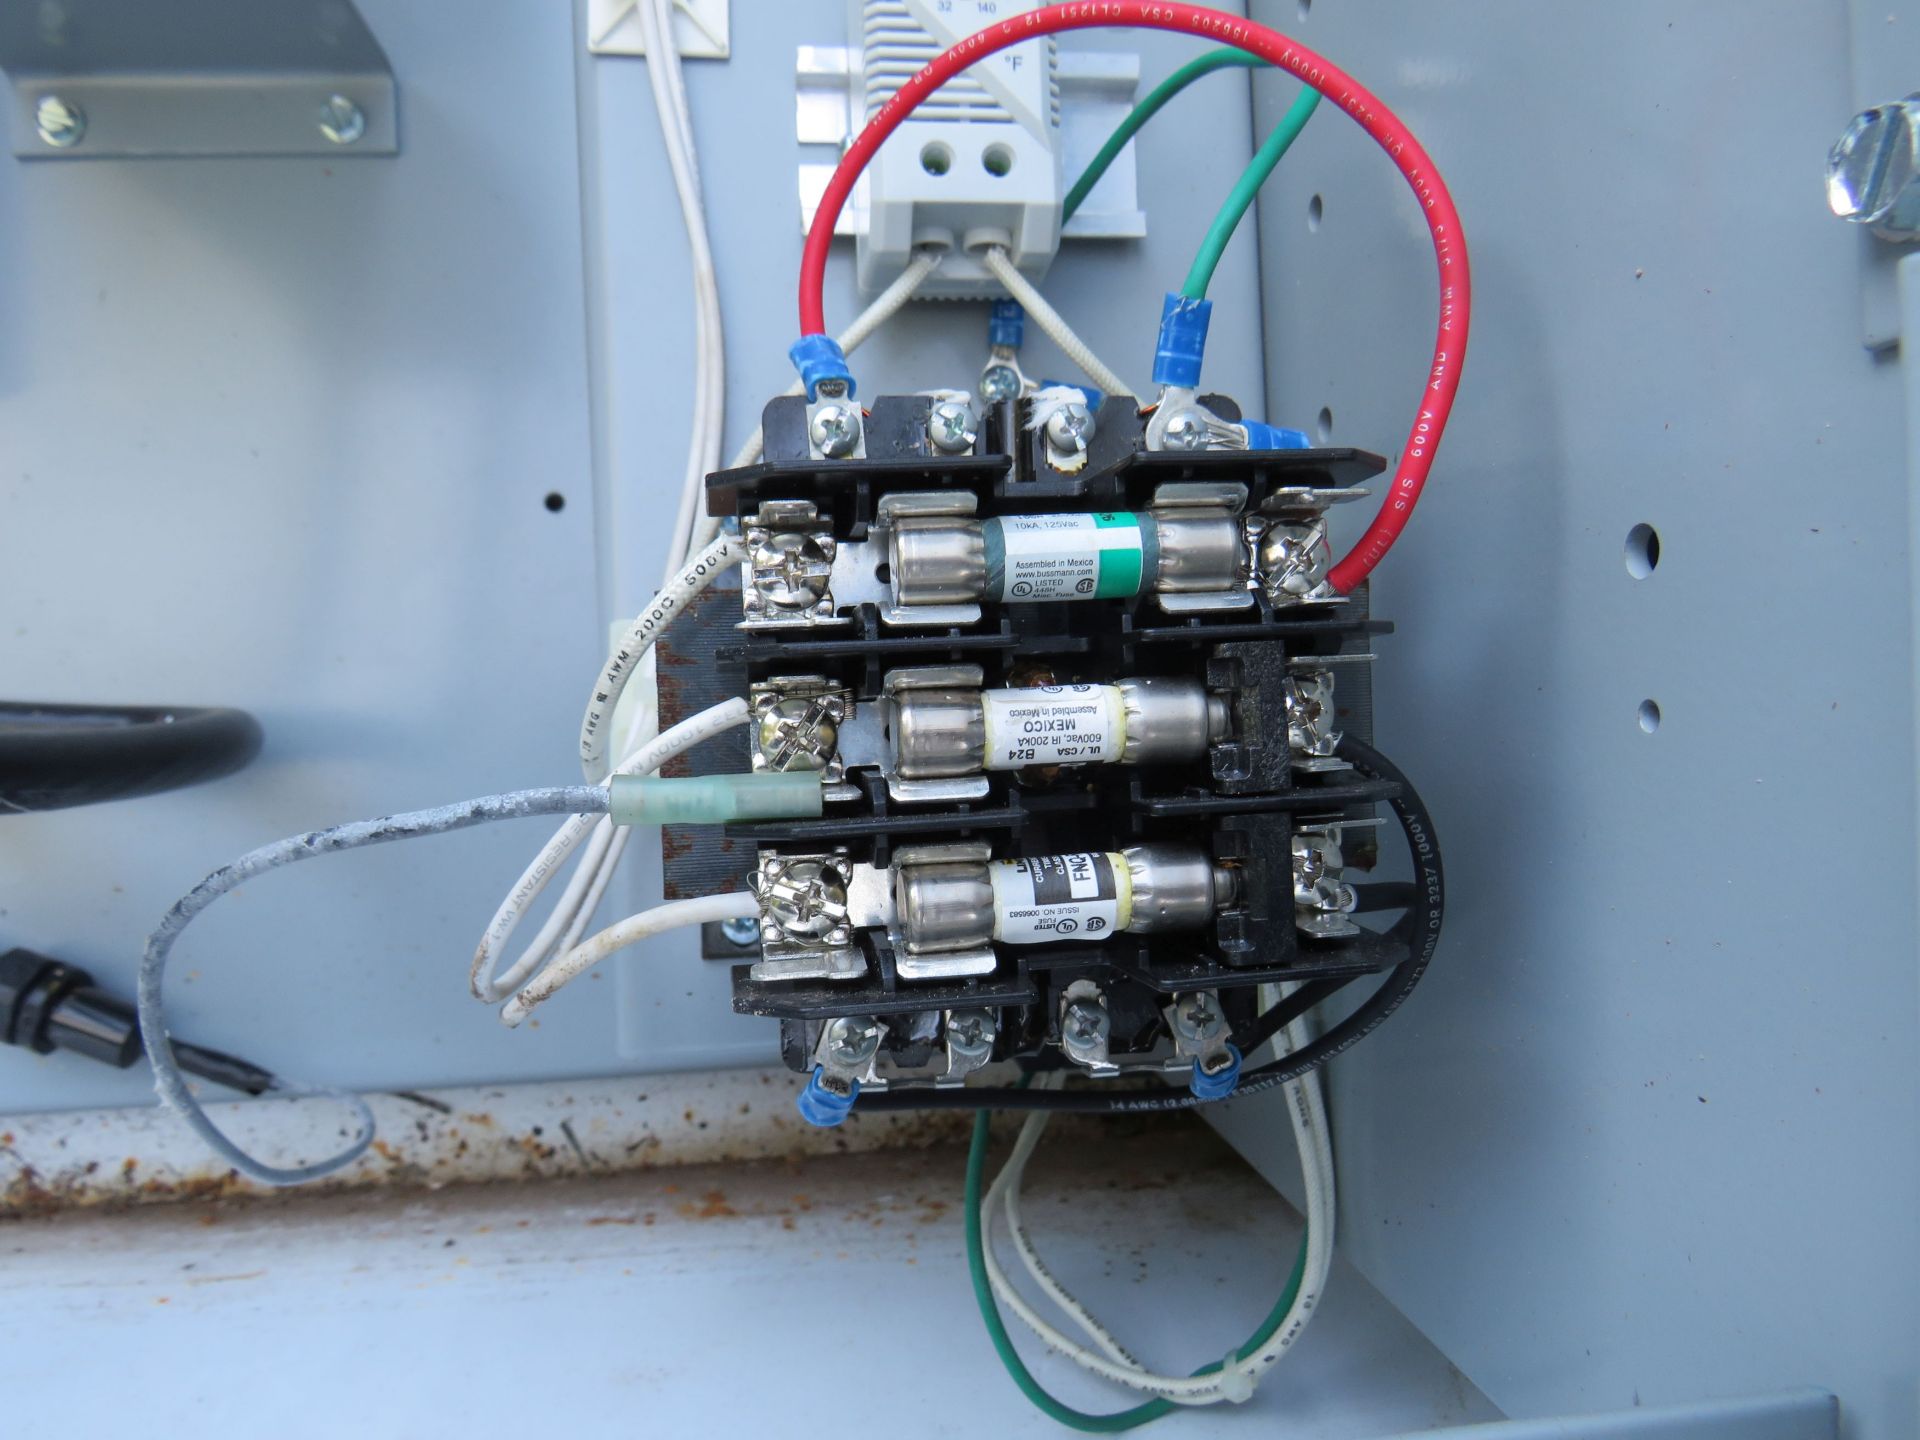 Asgo 200 amp control panel for generator - Image 8 of 9